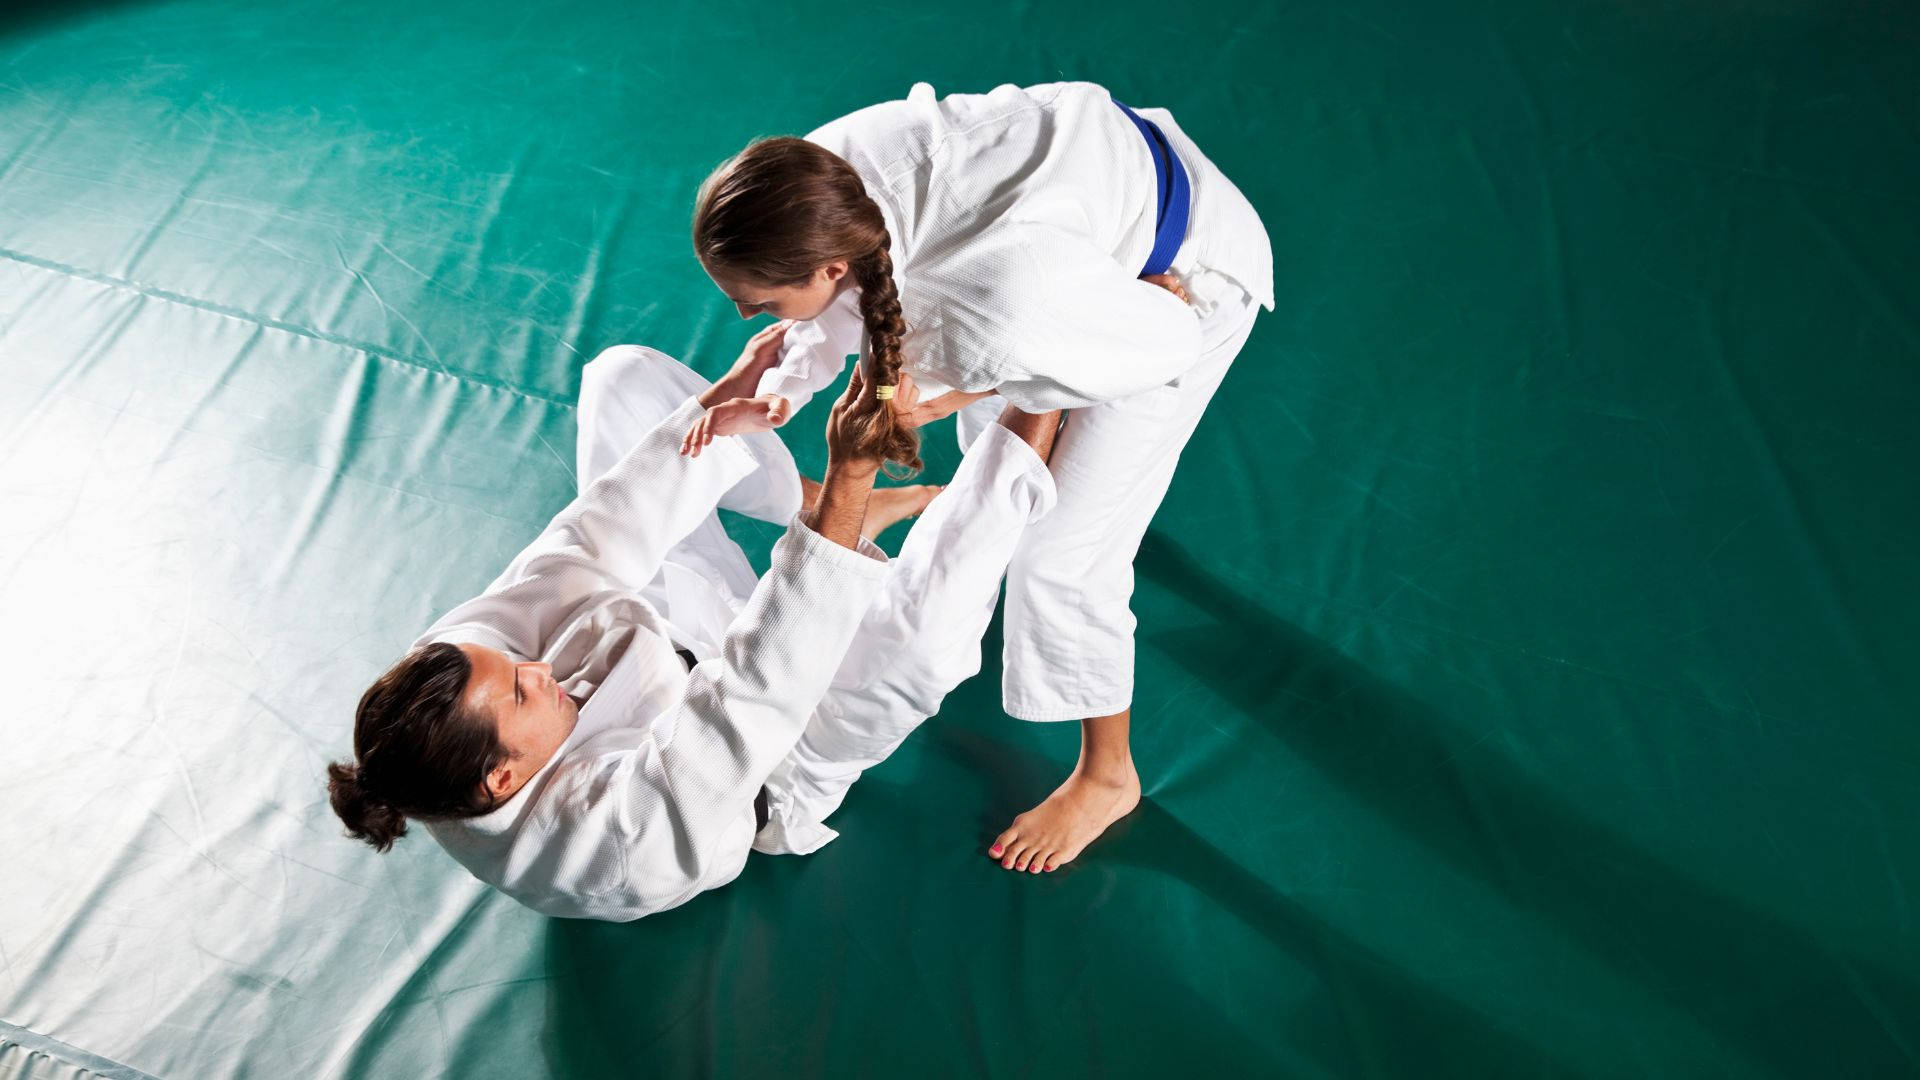 A Captivating Demonstration Of Brazilian Jiu-jitsu Prowess By Both Men And Women Contenders. Background